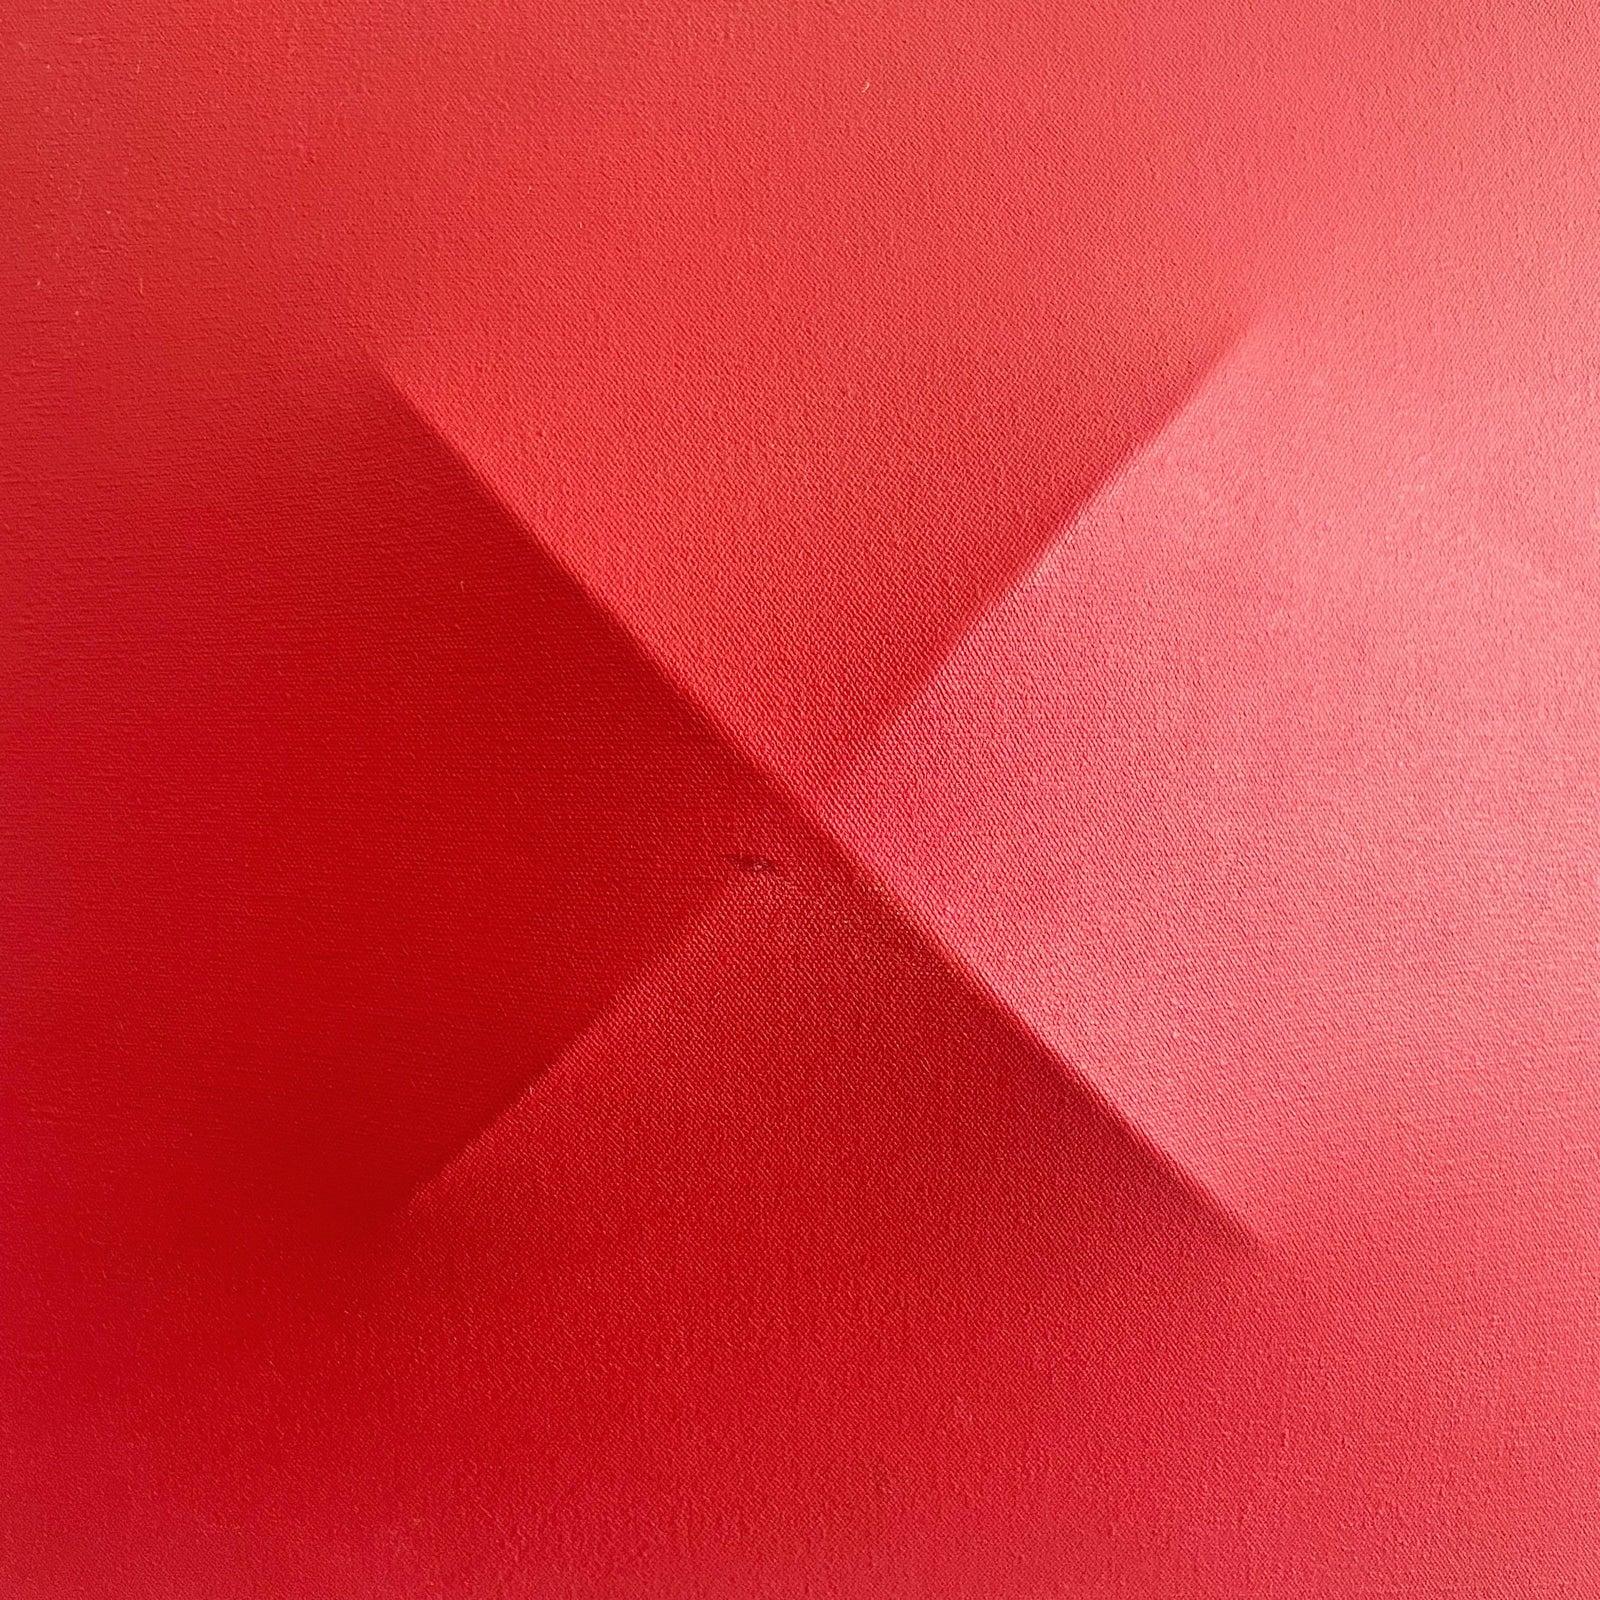 Tom Scmitt 1968, geformte Leinwand, 3dimensional, Acryl auf Leinwand in Rot (amerikanisch) im Angebot